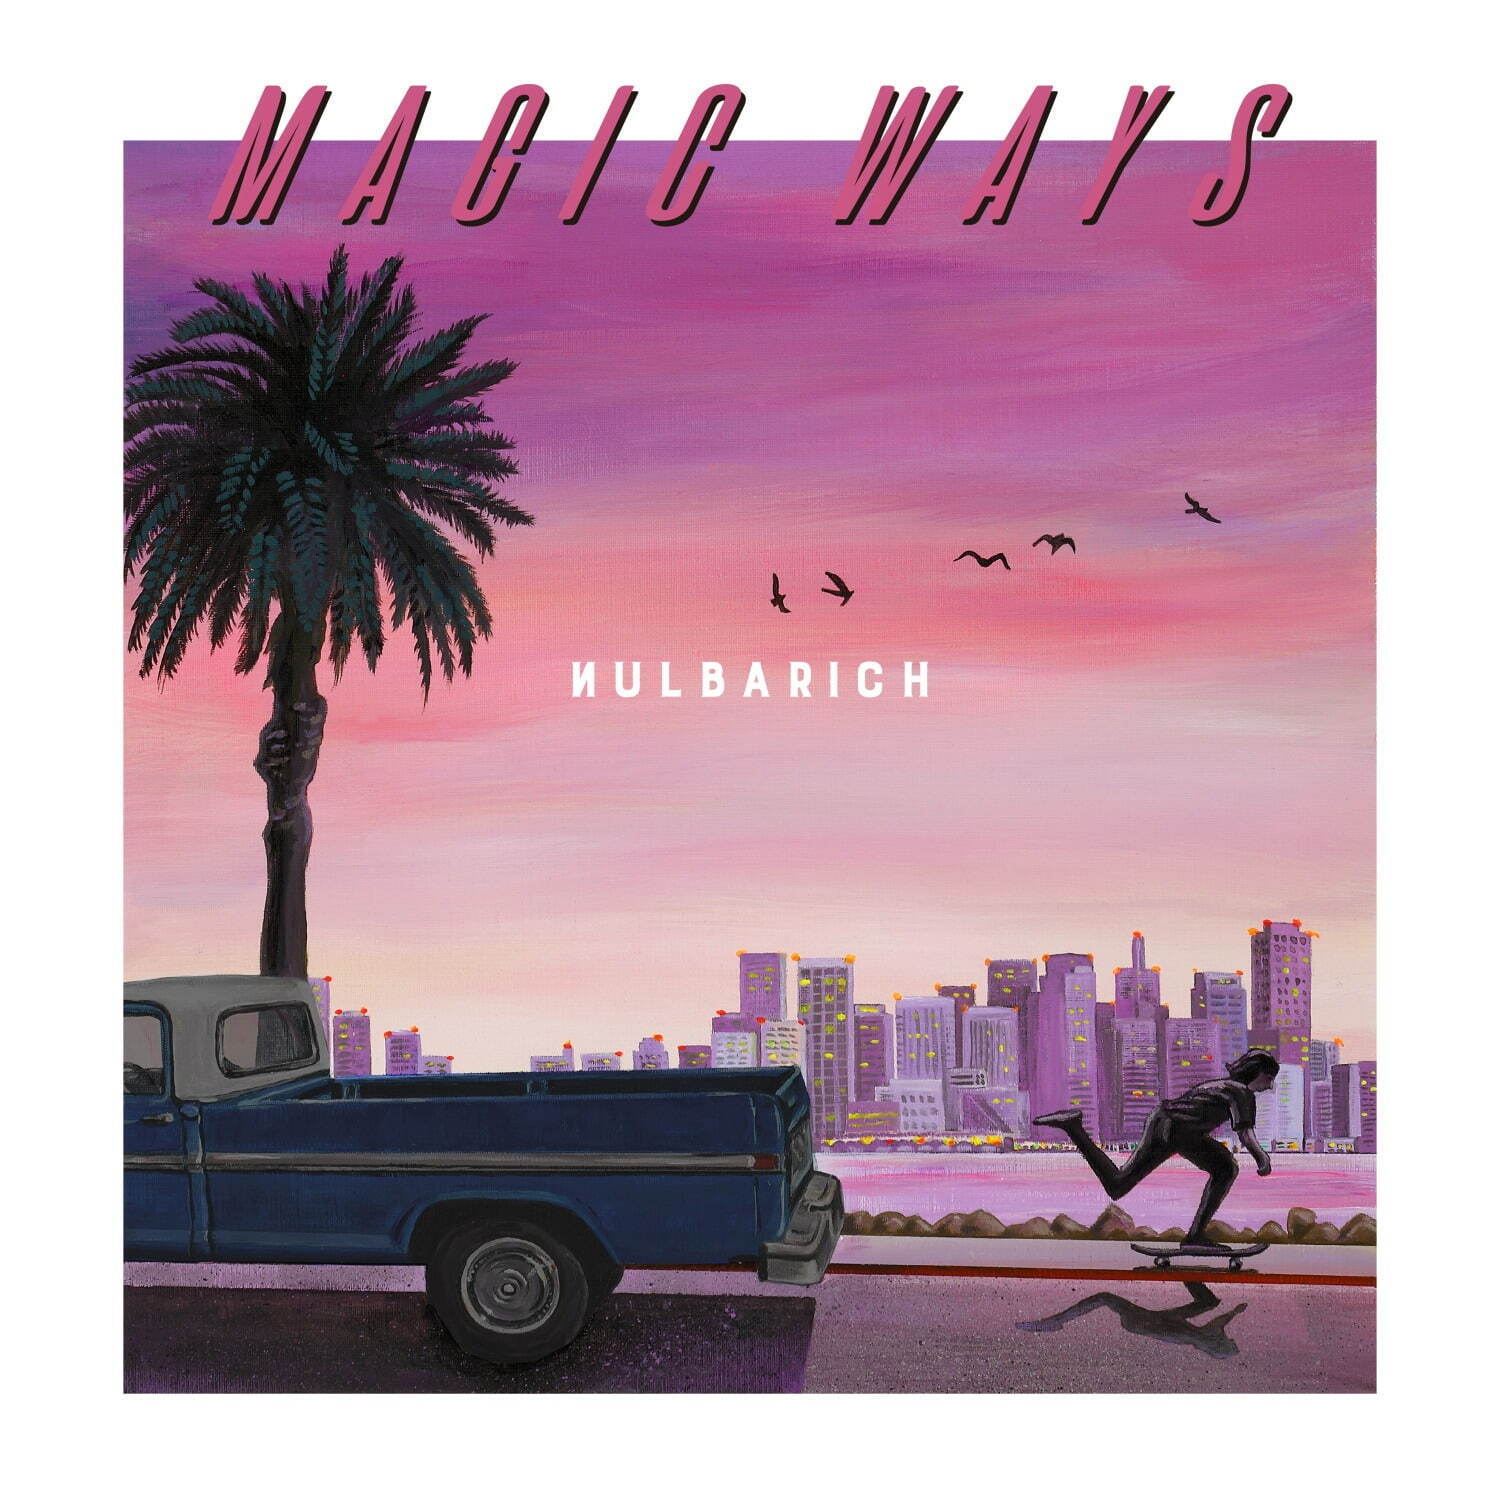 Nulbarich 新曲「MAGIC WAYS」ジャケット写真